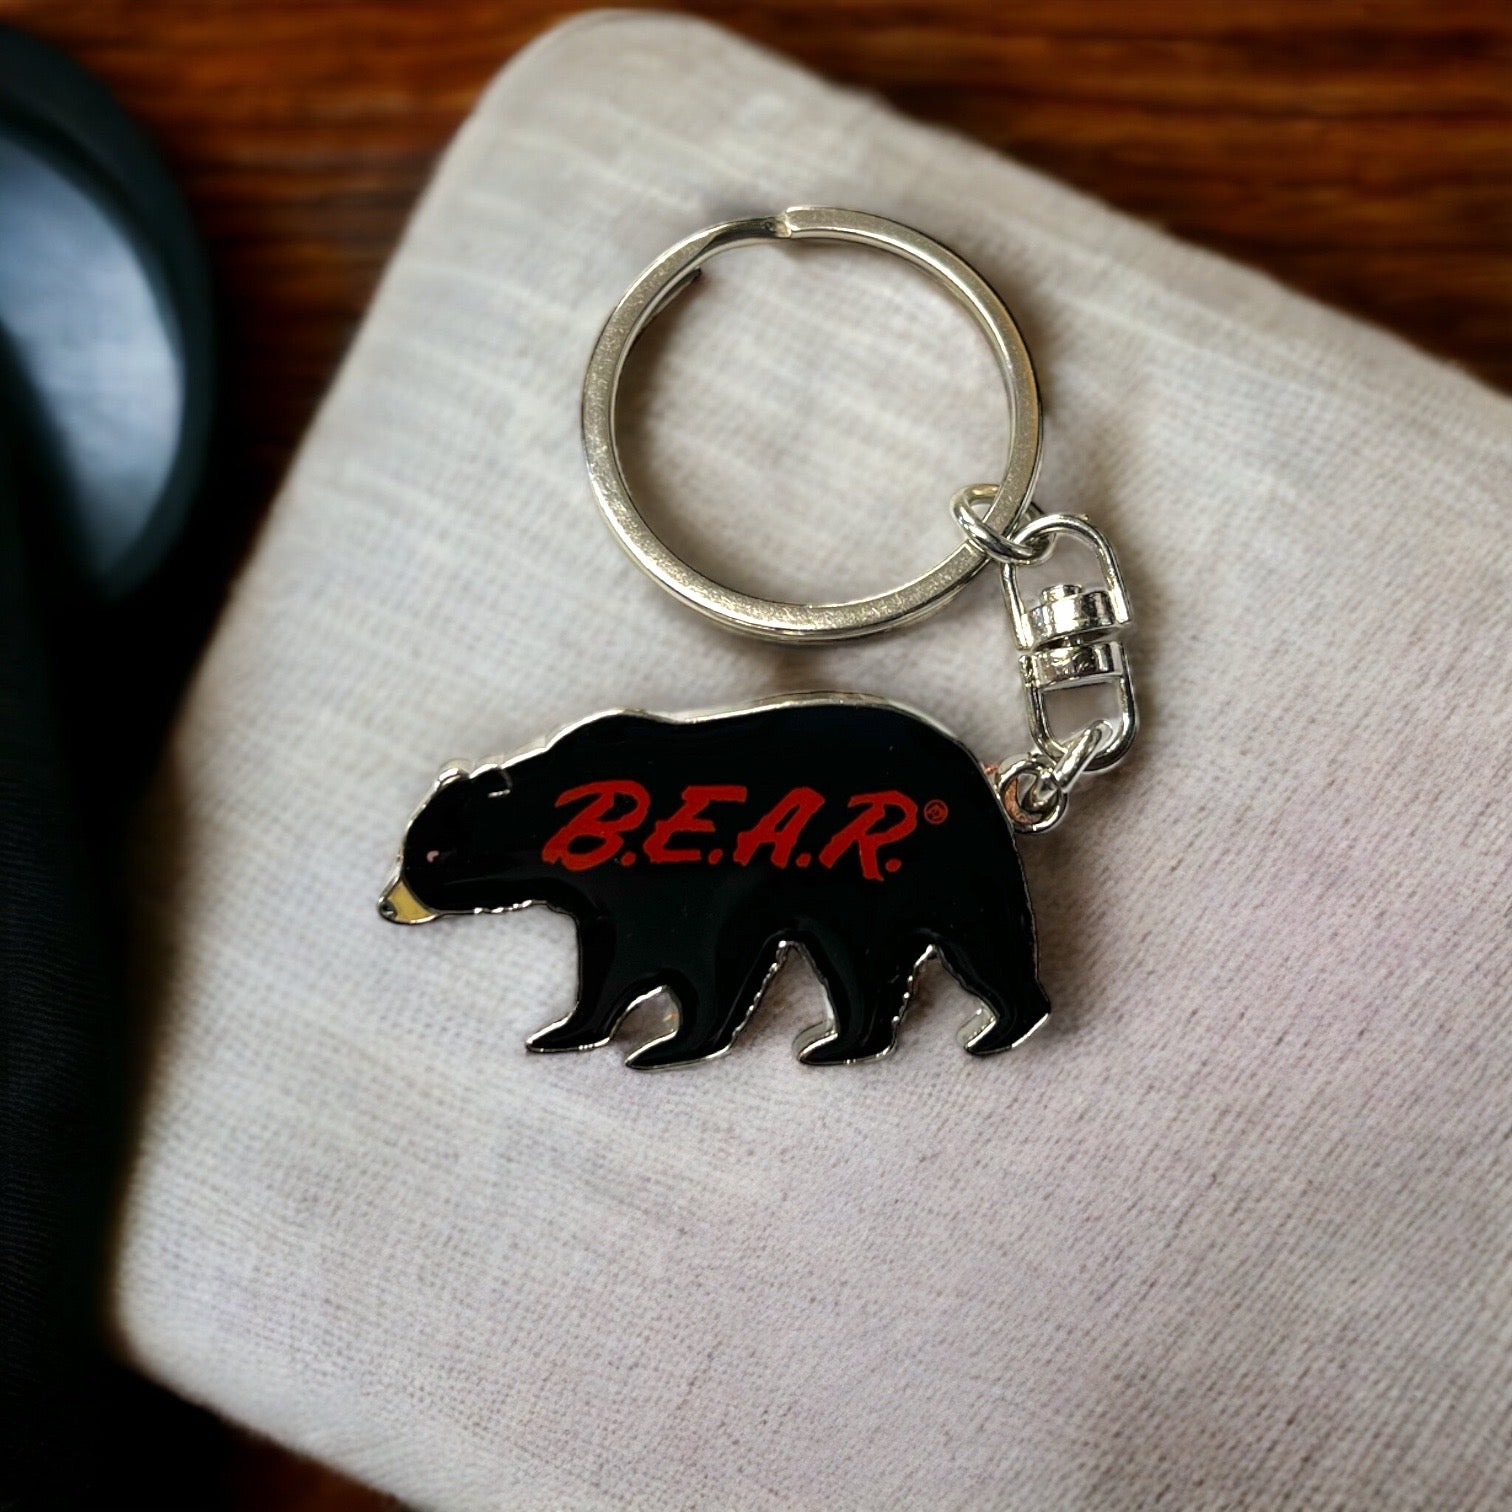 •	B.E.A.R. Black bear keychain bottle opener